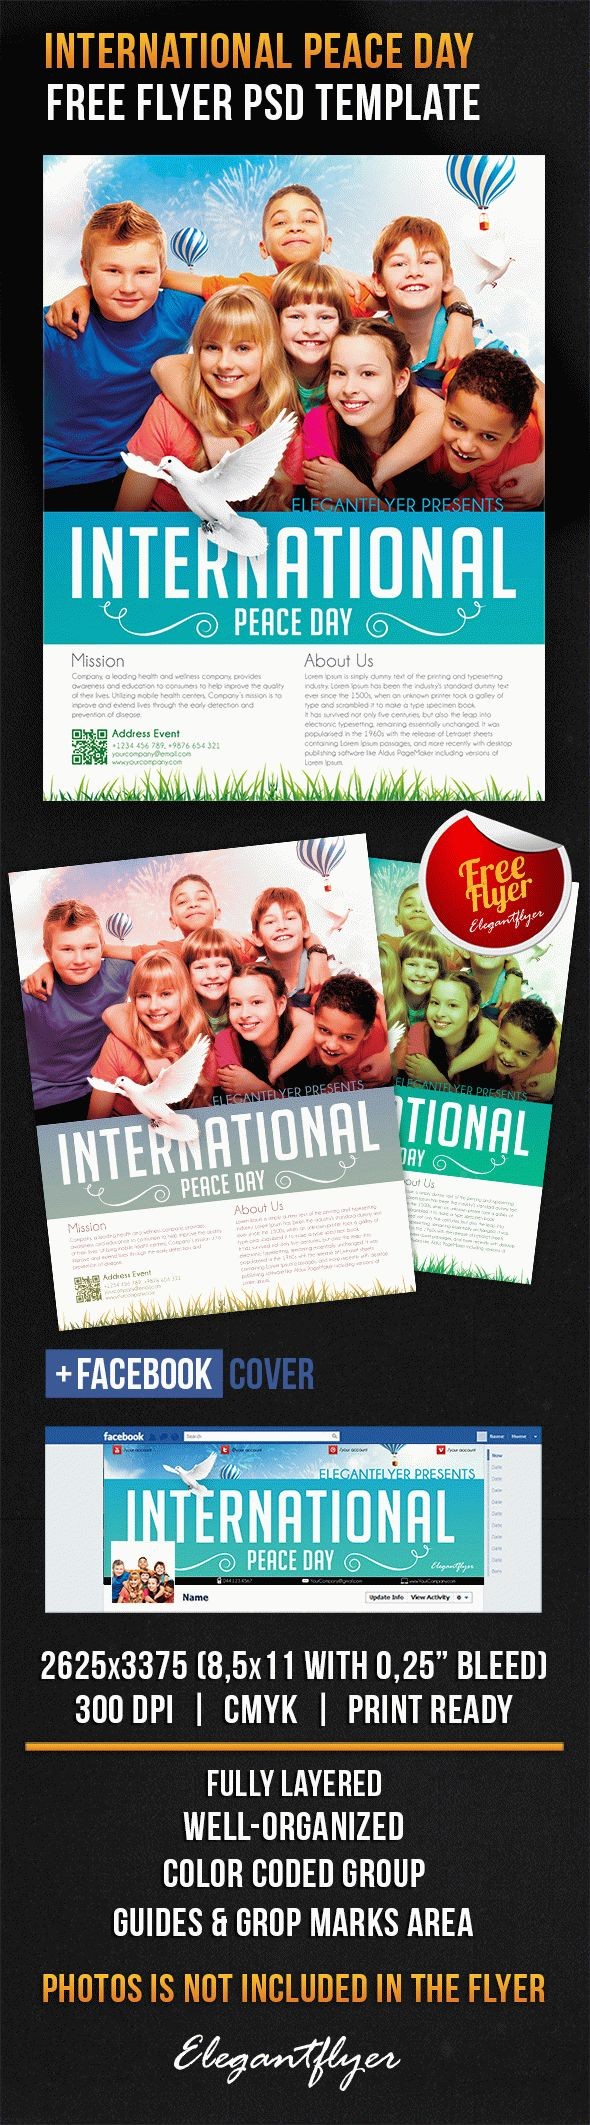 International Peace Day Flyer by ElegantFlyer